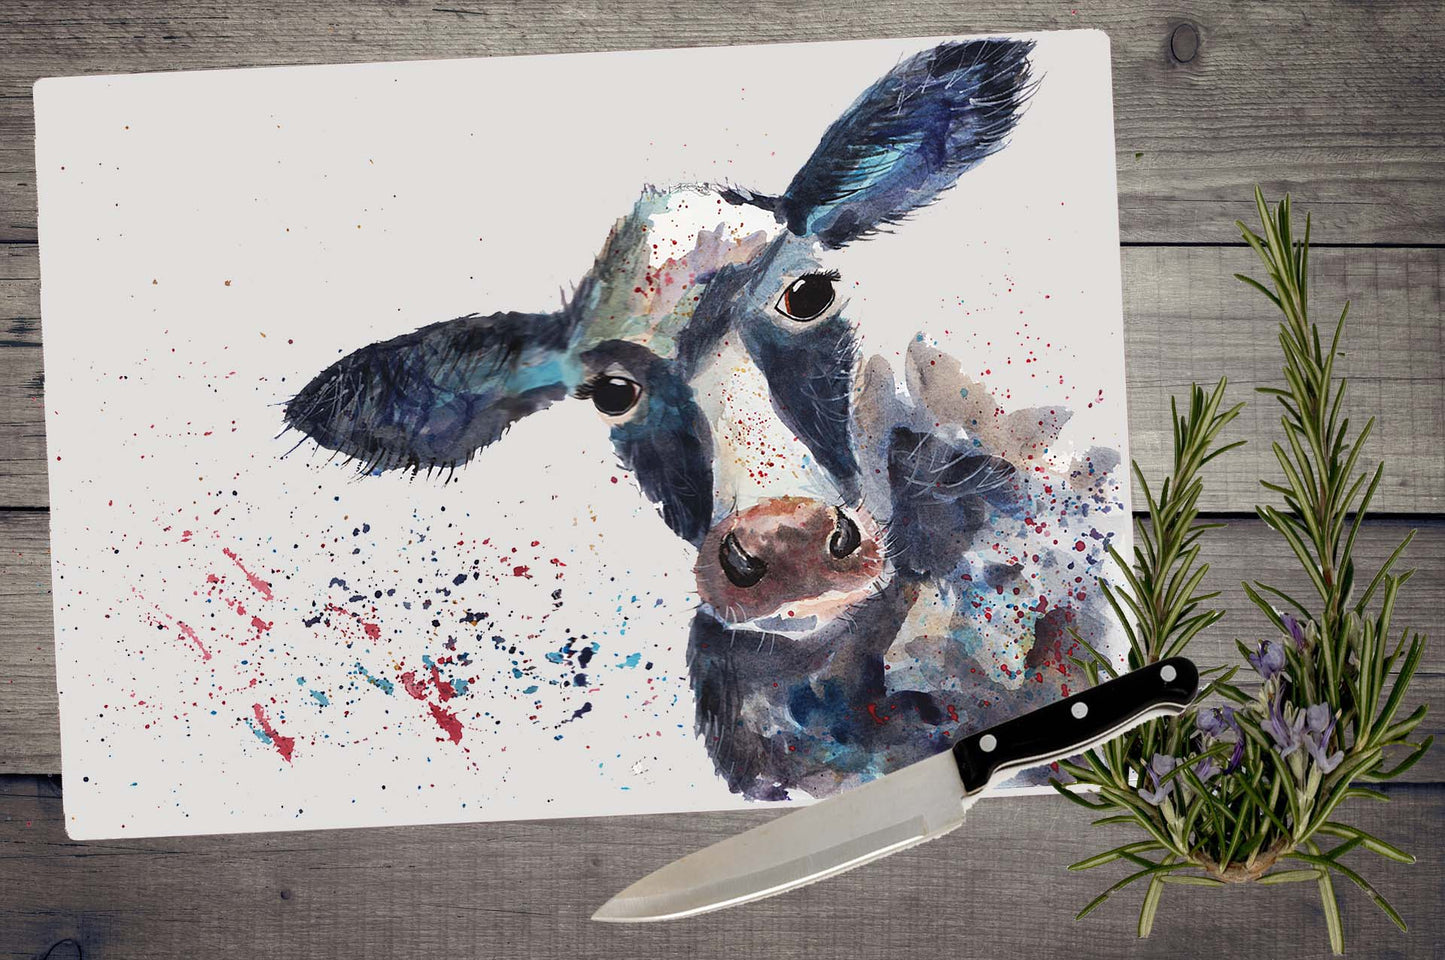 Arthur cow chopping board / Worktop saver